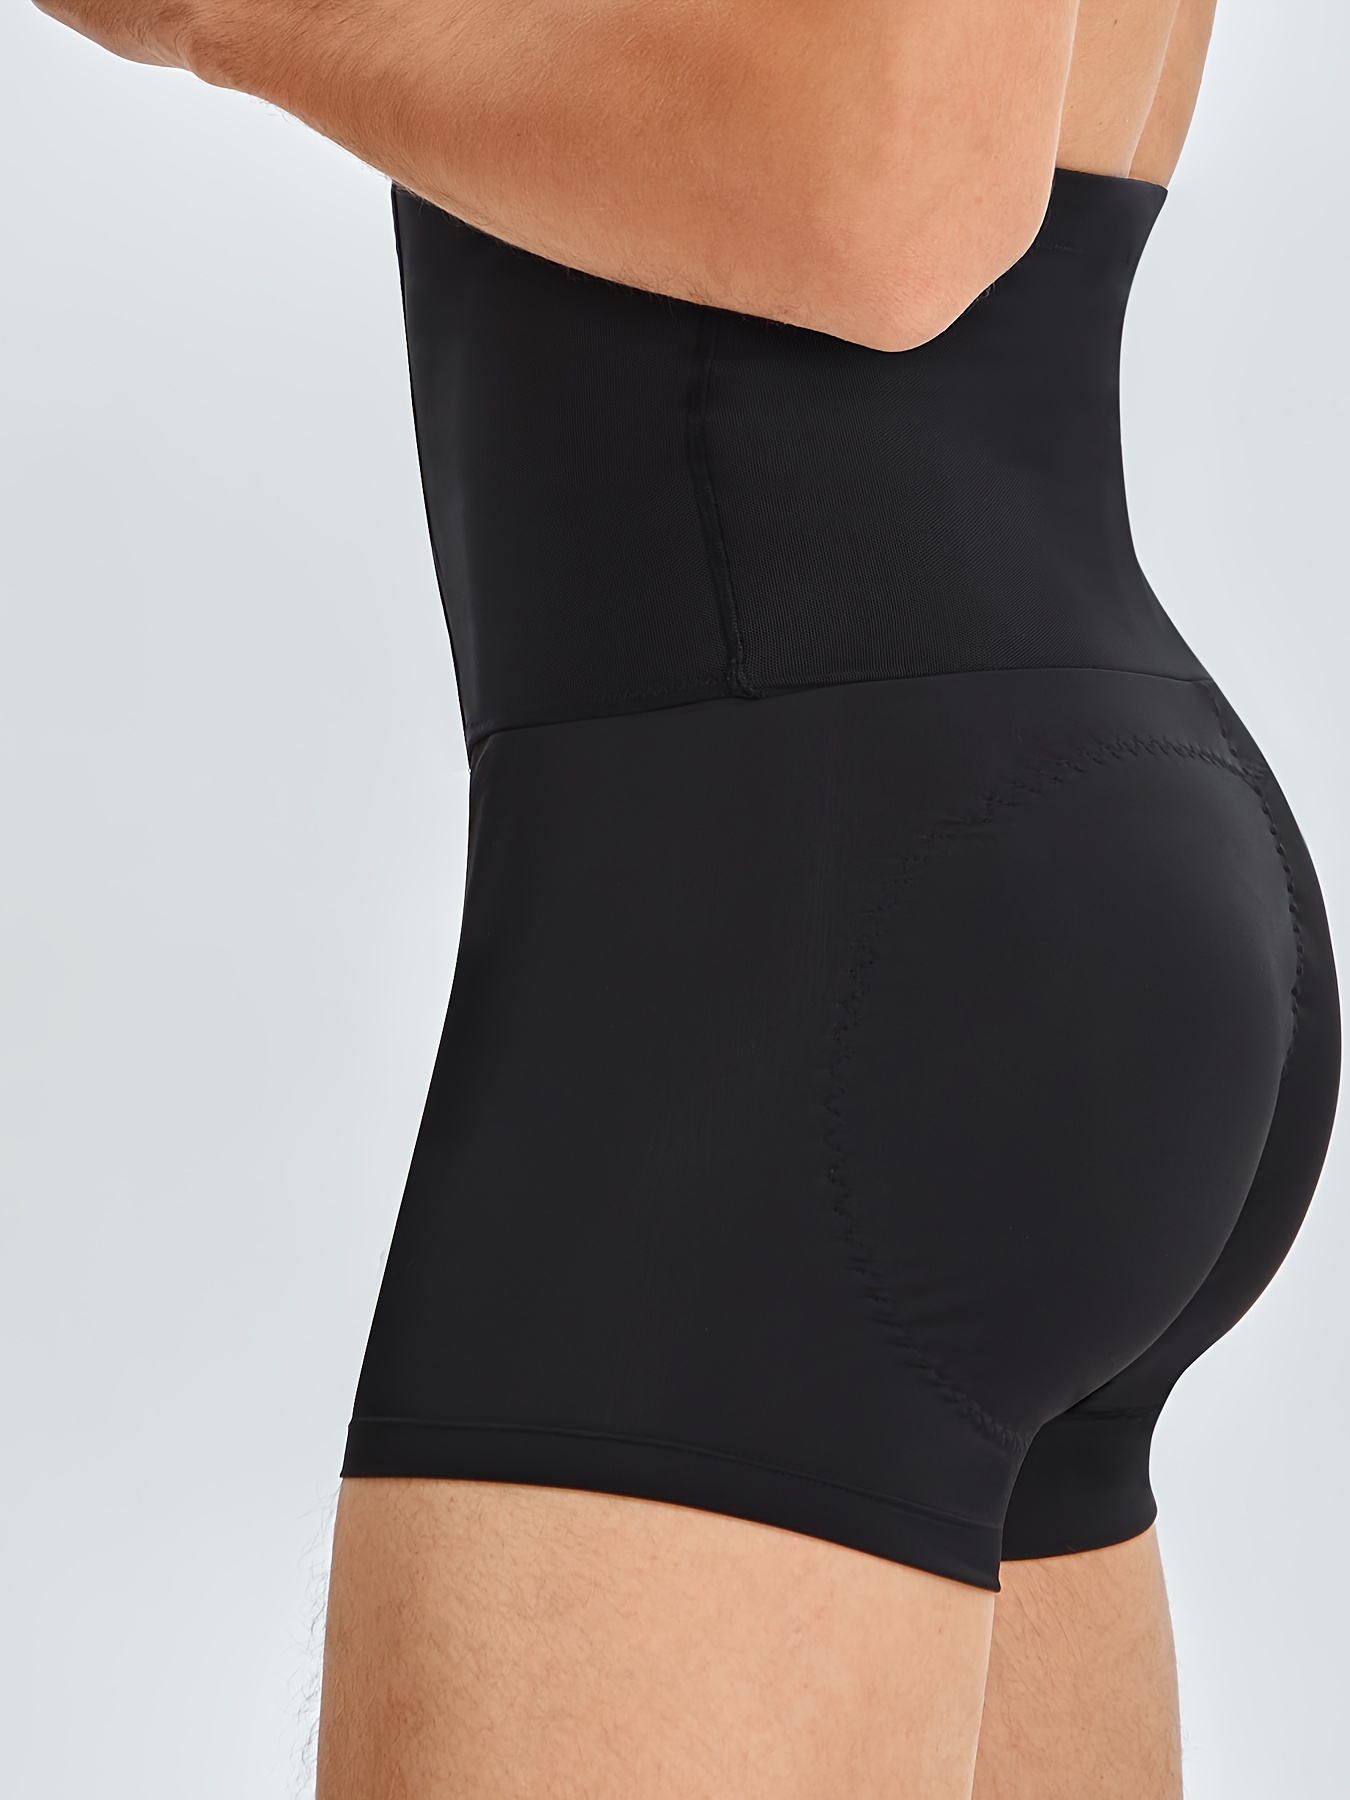 SCARBORO Men's Underwear Adjustable Waist Trainer Shorts Tummy Control  Shorts High Waist Compression Shapewear Slimming Body Shaper Underwear With